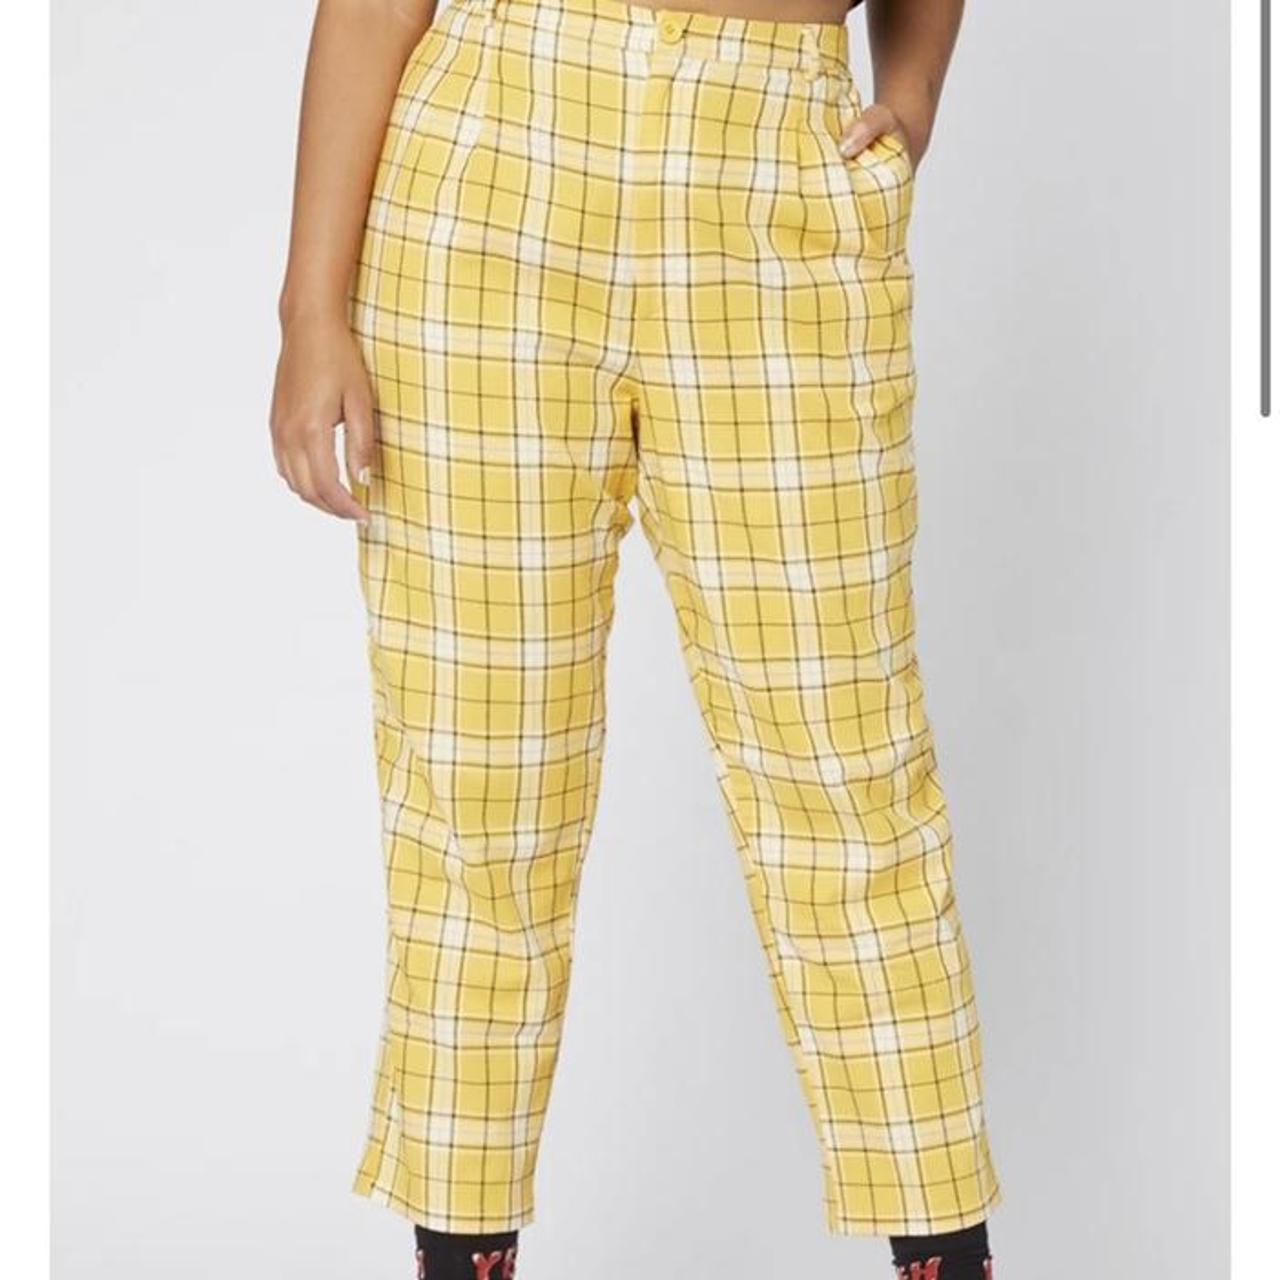 Product Image 1 - Dangerfield yellow tartan pants 
Size